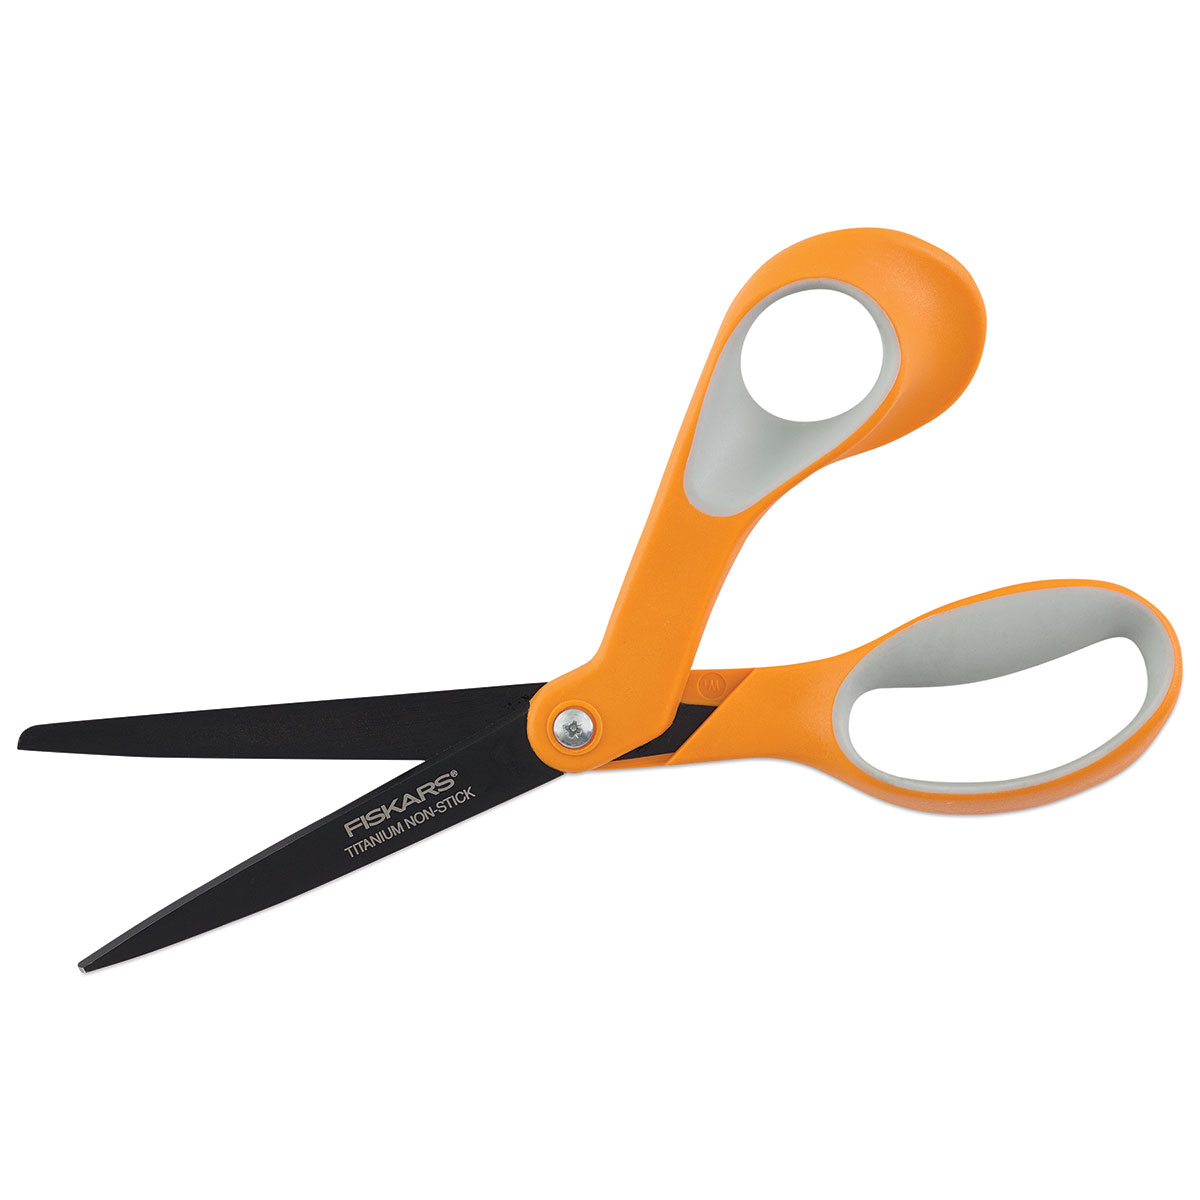  Fiskars Cuts + More Multi-tool Scissors, Includes Protective  Case With Scissor Sharpener, Length: 23 cm, Titanium Coating, Stainless  Steel Blade/Plastic Handles, Black/Orange, 1000809 : Arts, Crafts & Sewing